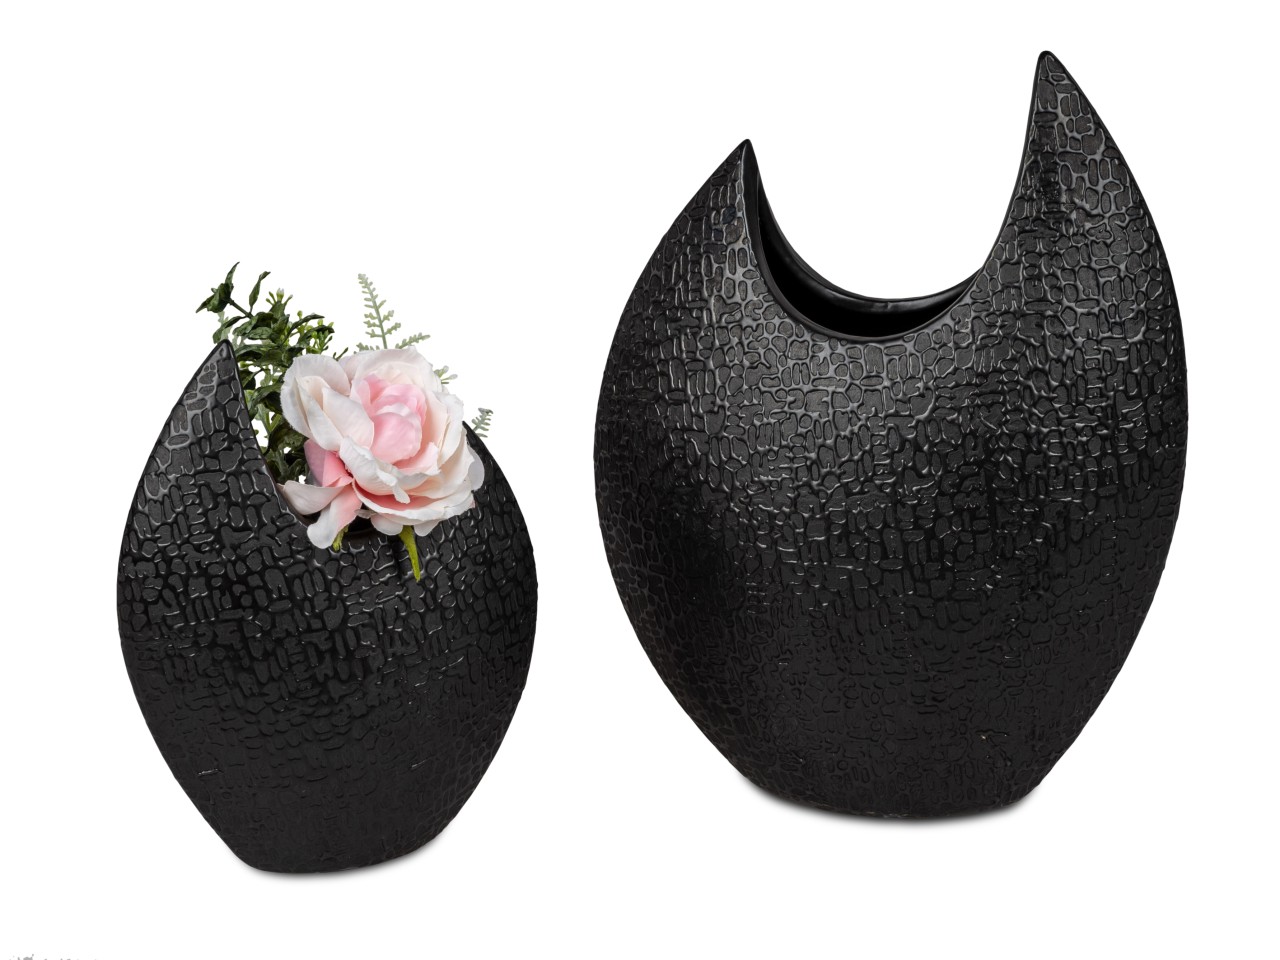 Deko Vase MODERN BLACK Moon flach oval H. 21cm matt schwarz Keramik Formano (2)